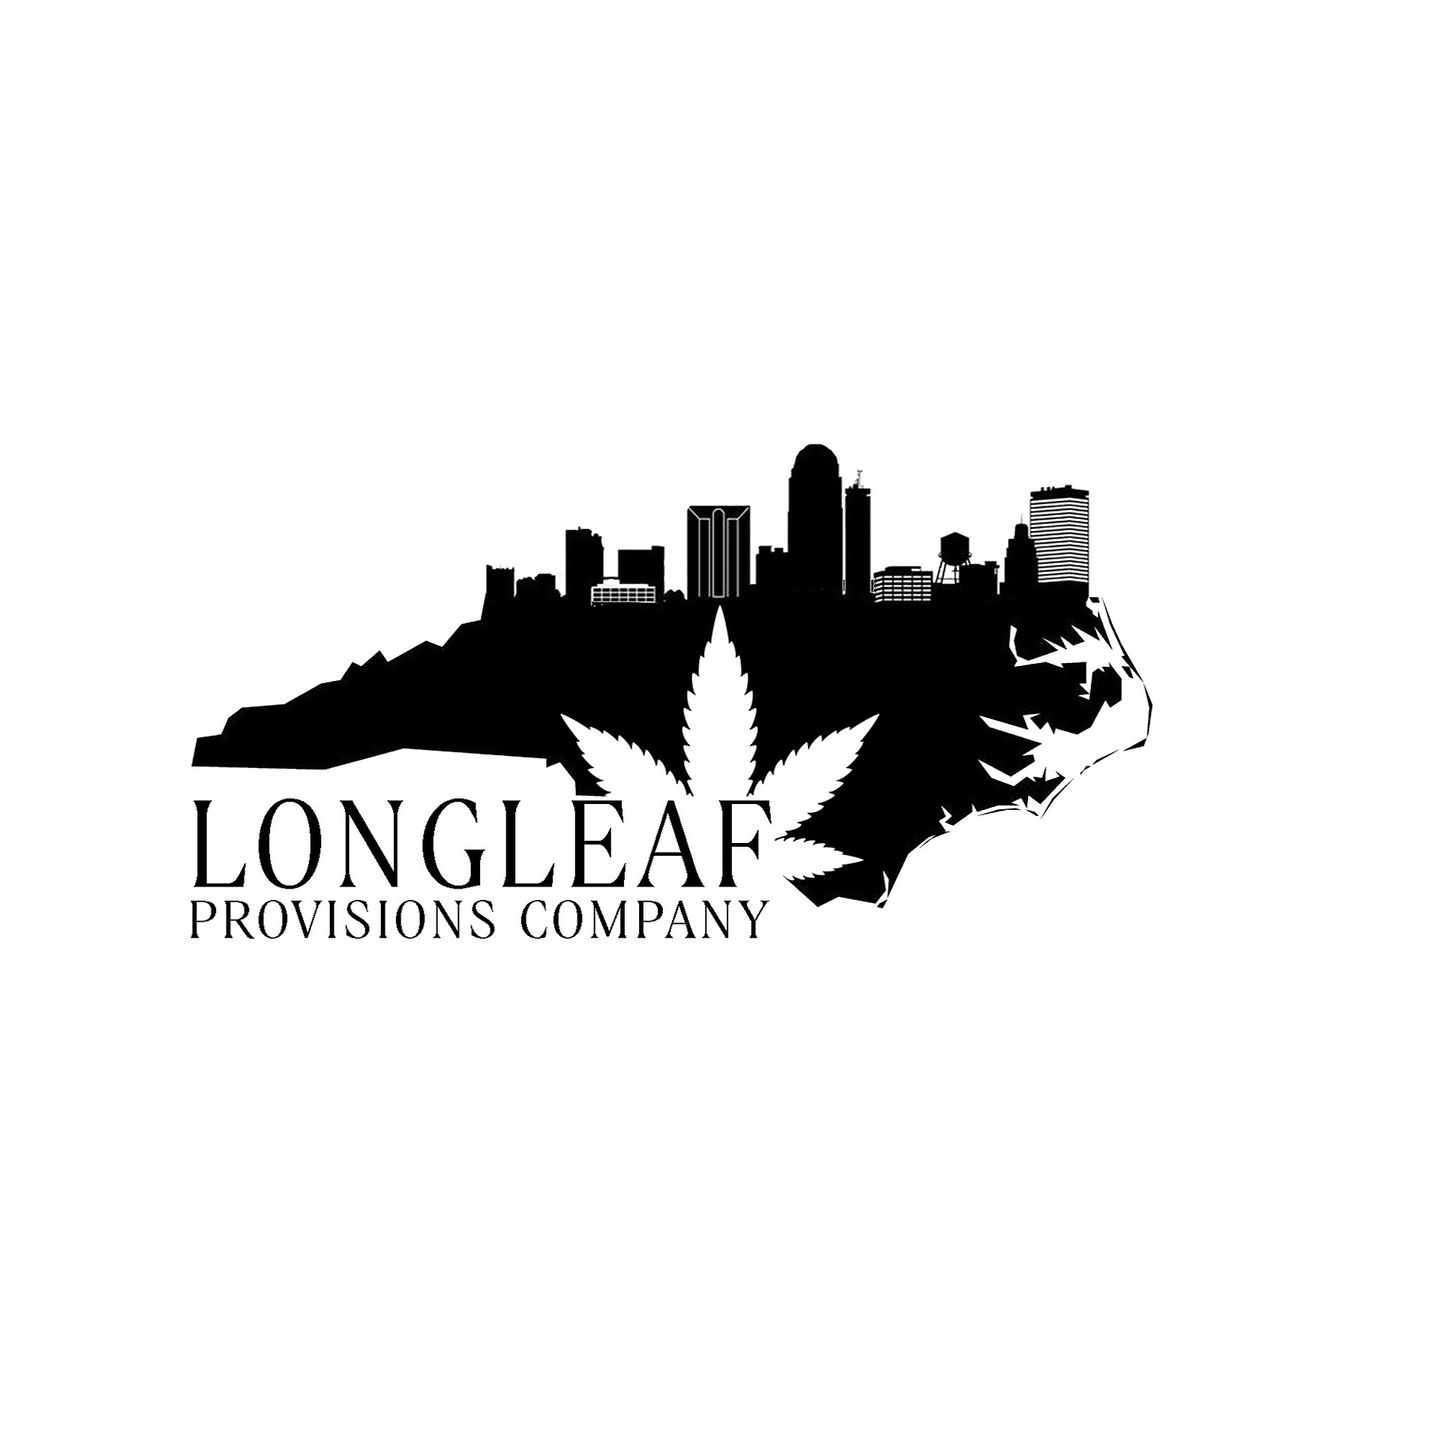 image feature Longleaf Provisions Company